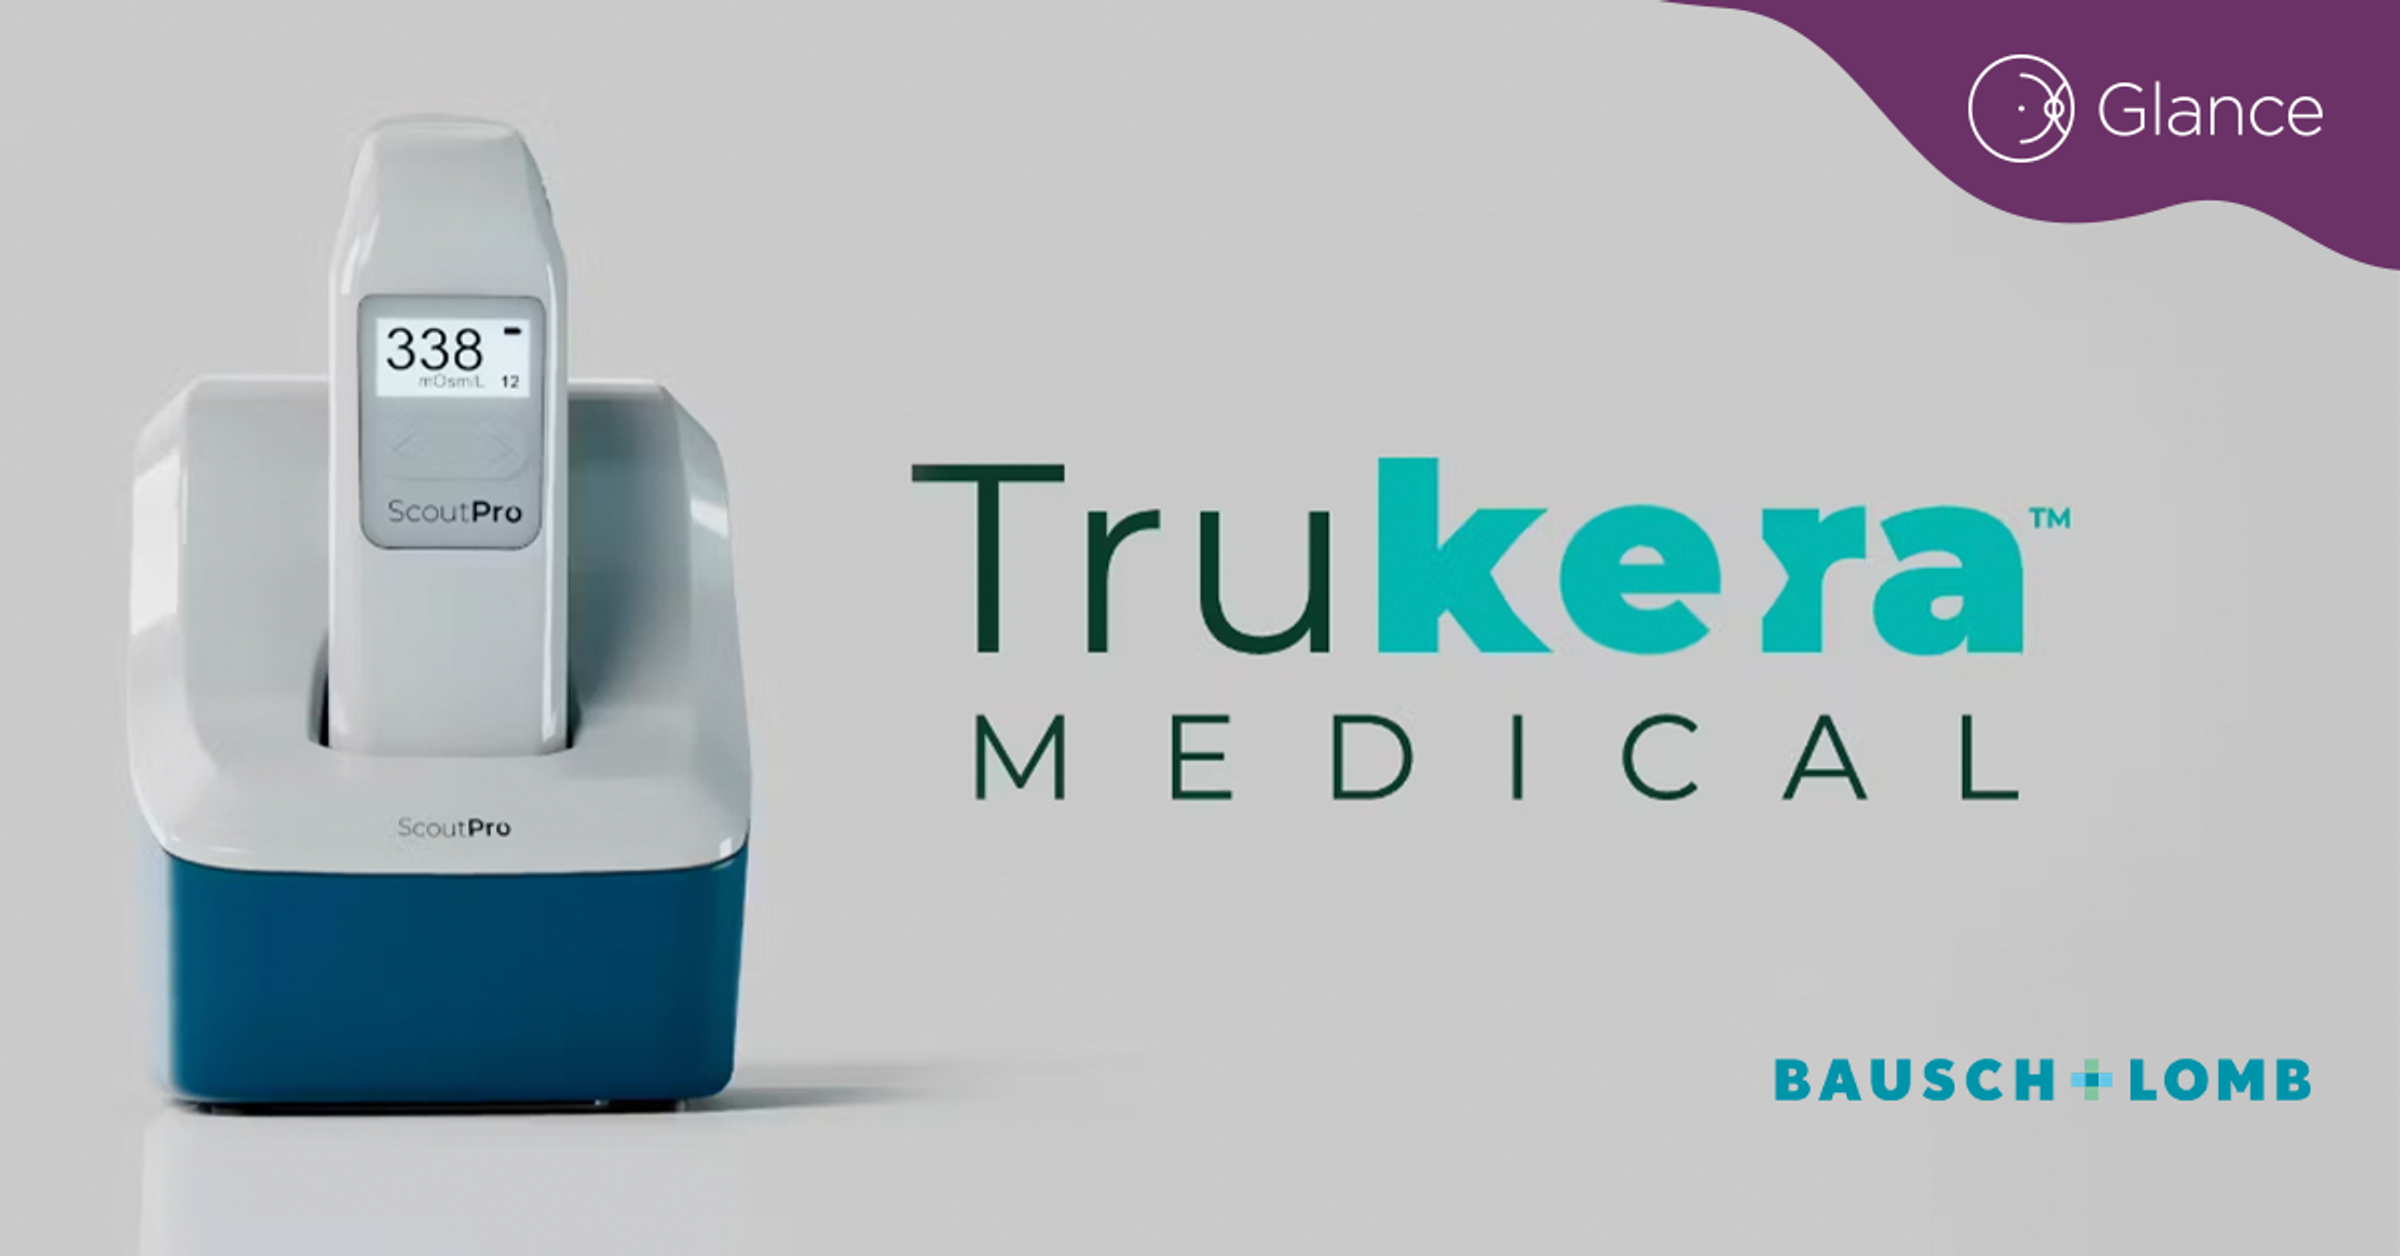 Bausch + Lomb acquires Trukera Medical